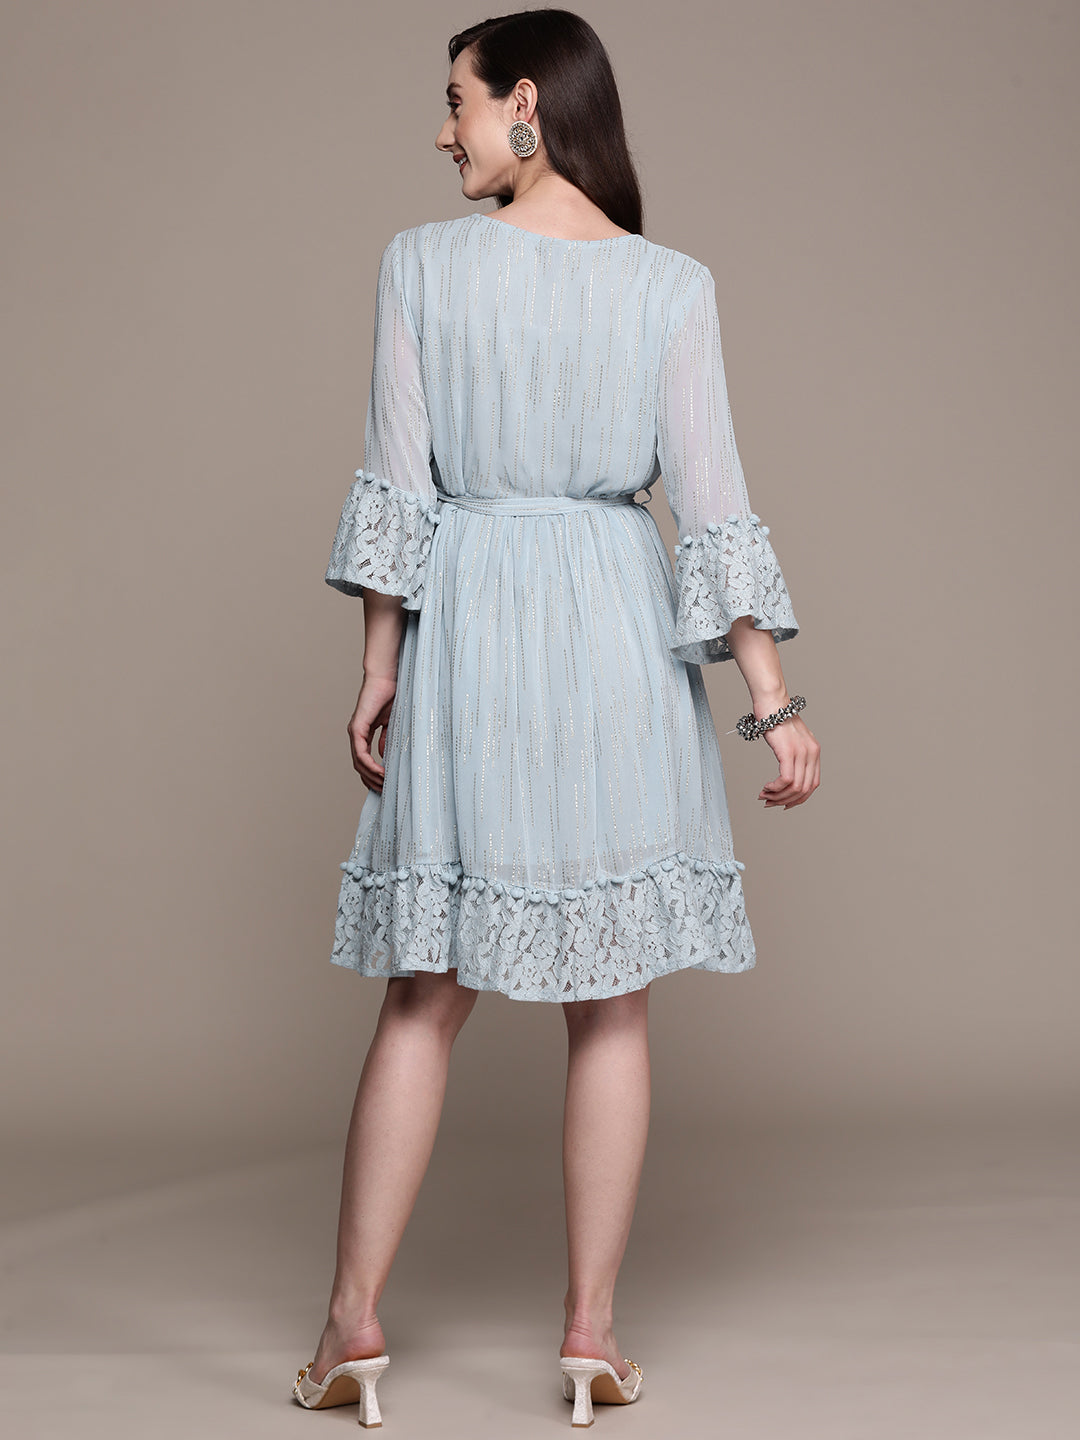 Ishin Women's Blue Embellished A-Line Dress